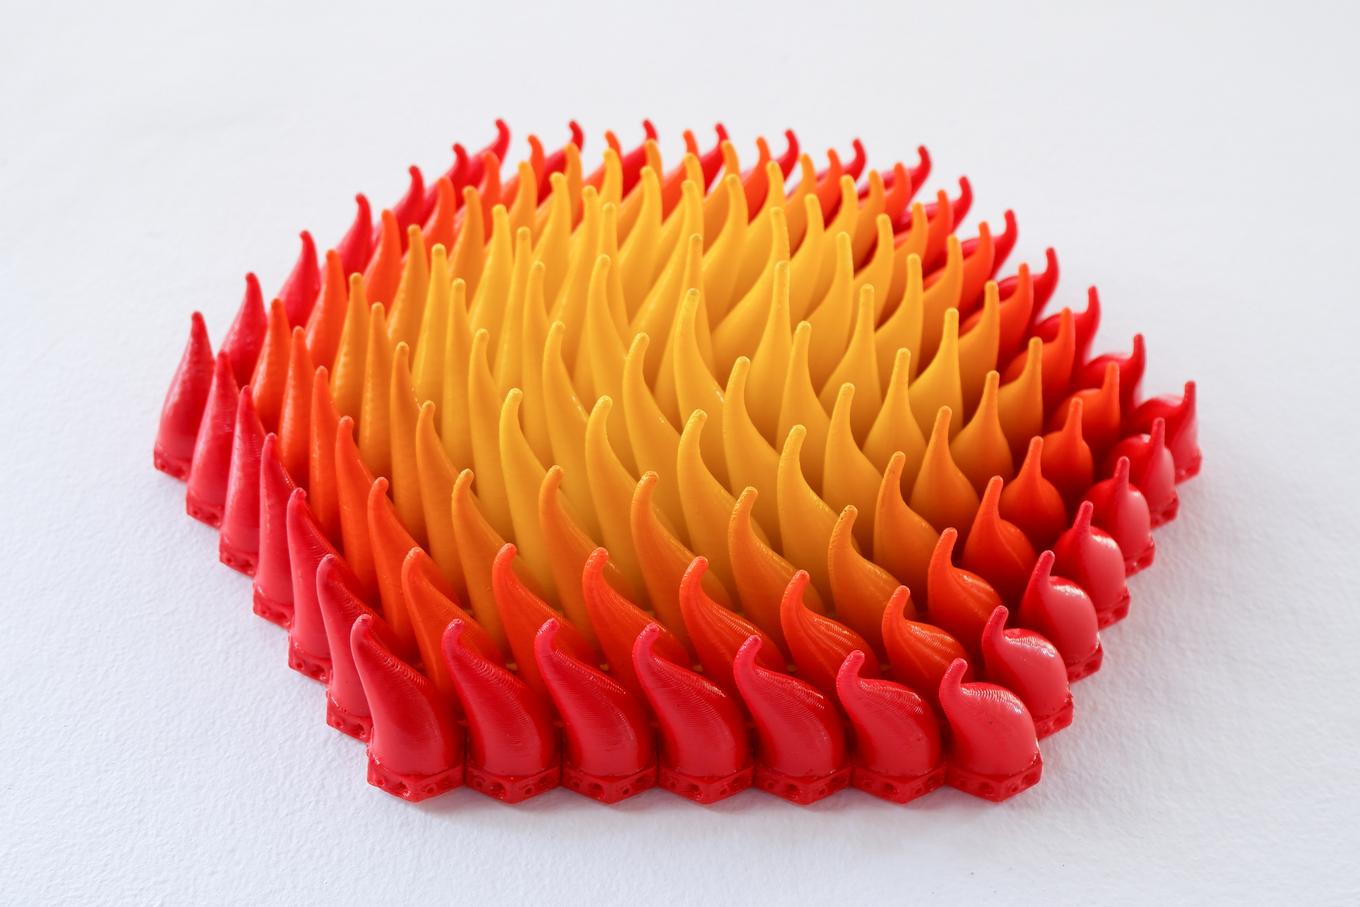 Fiery Sprouts | Herschel Shapiro | Abstract Dimensional Wall Sculpture